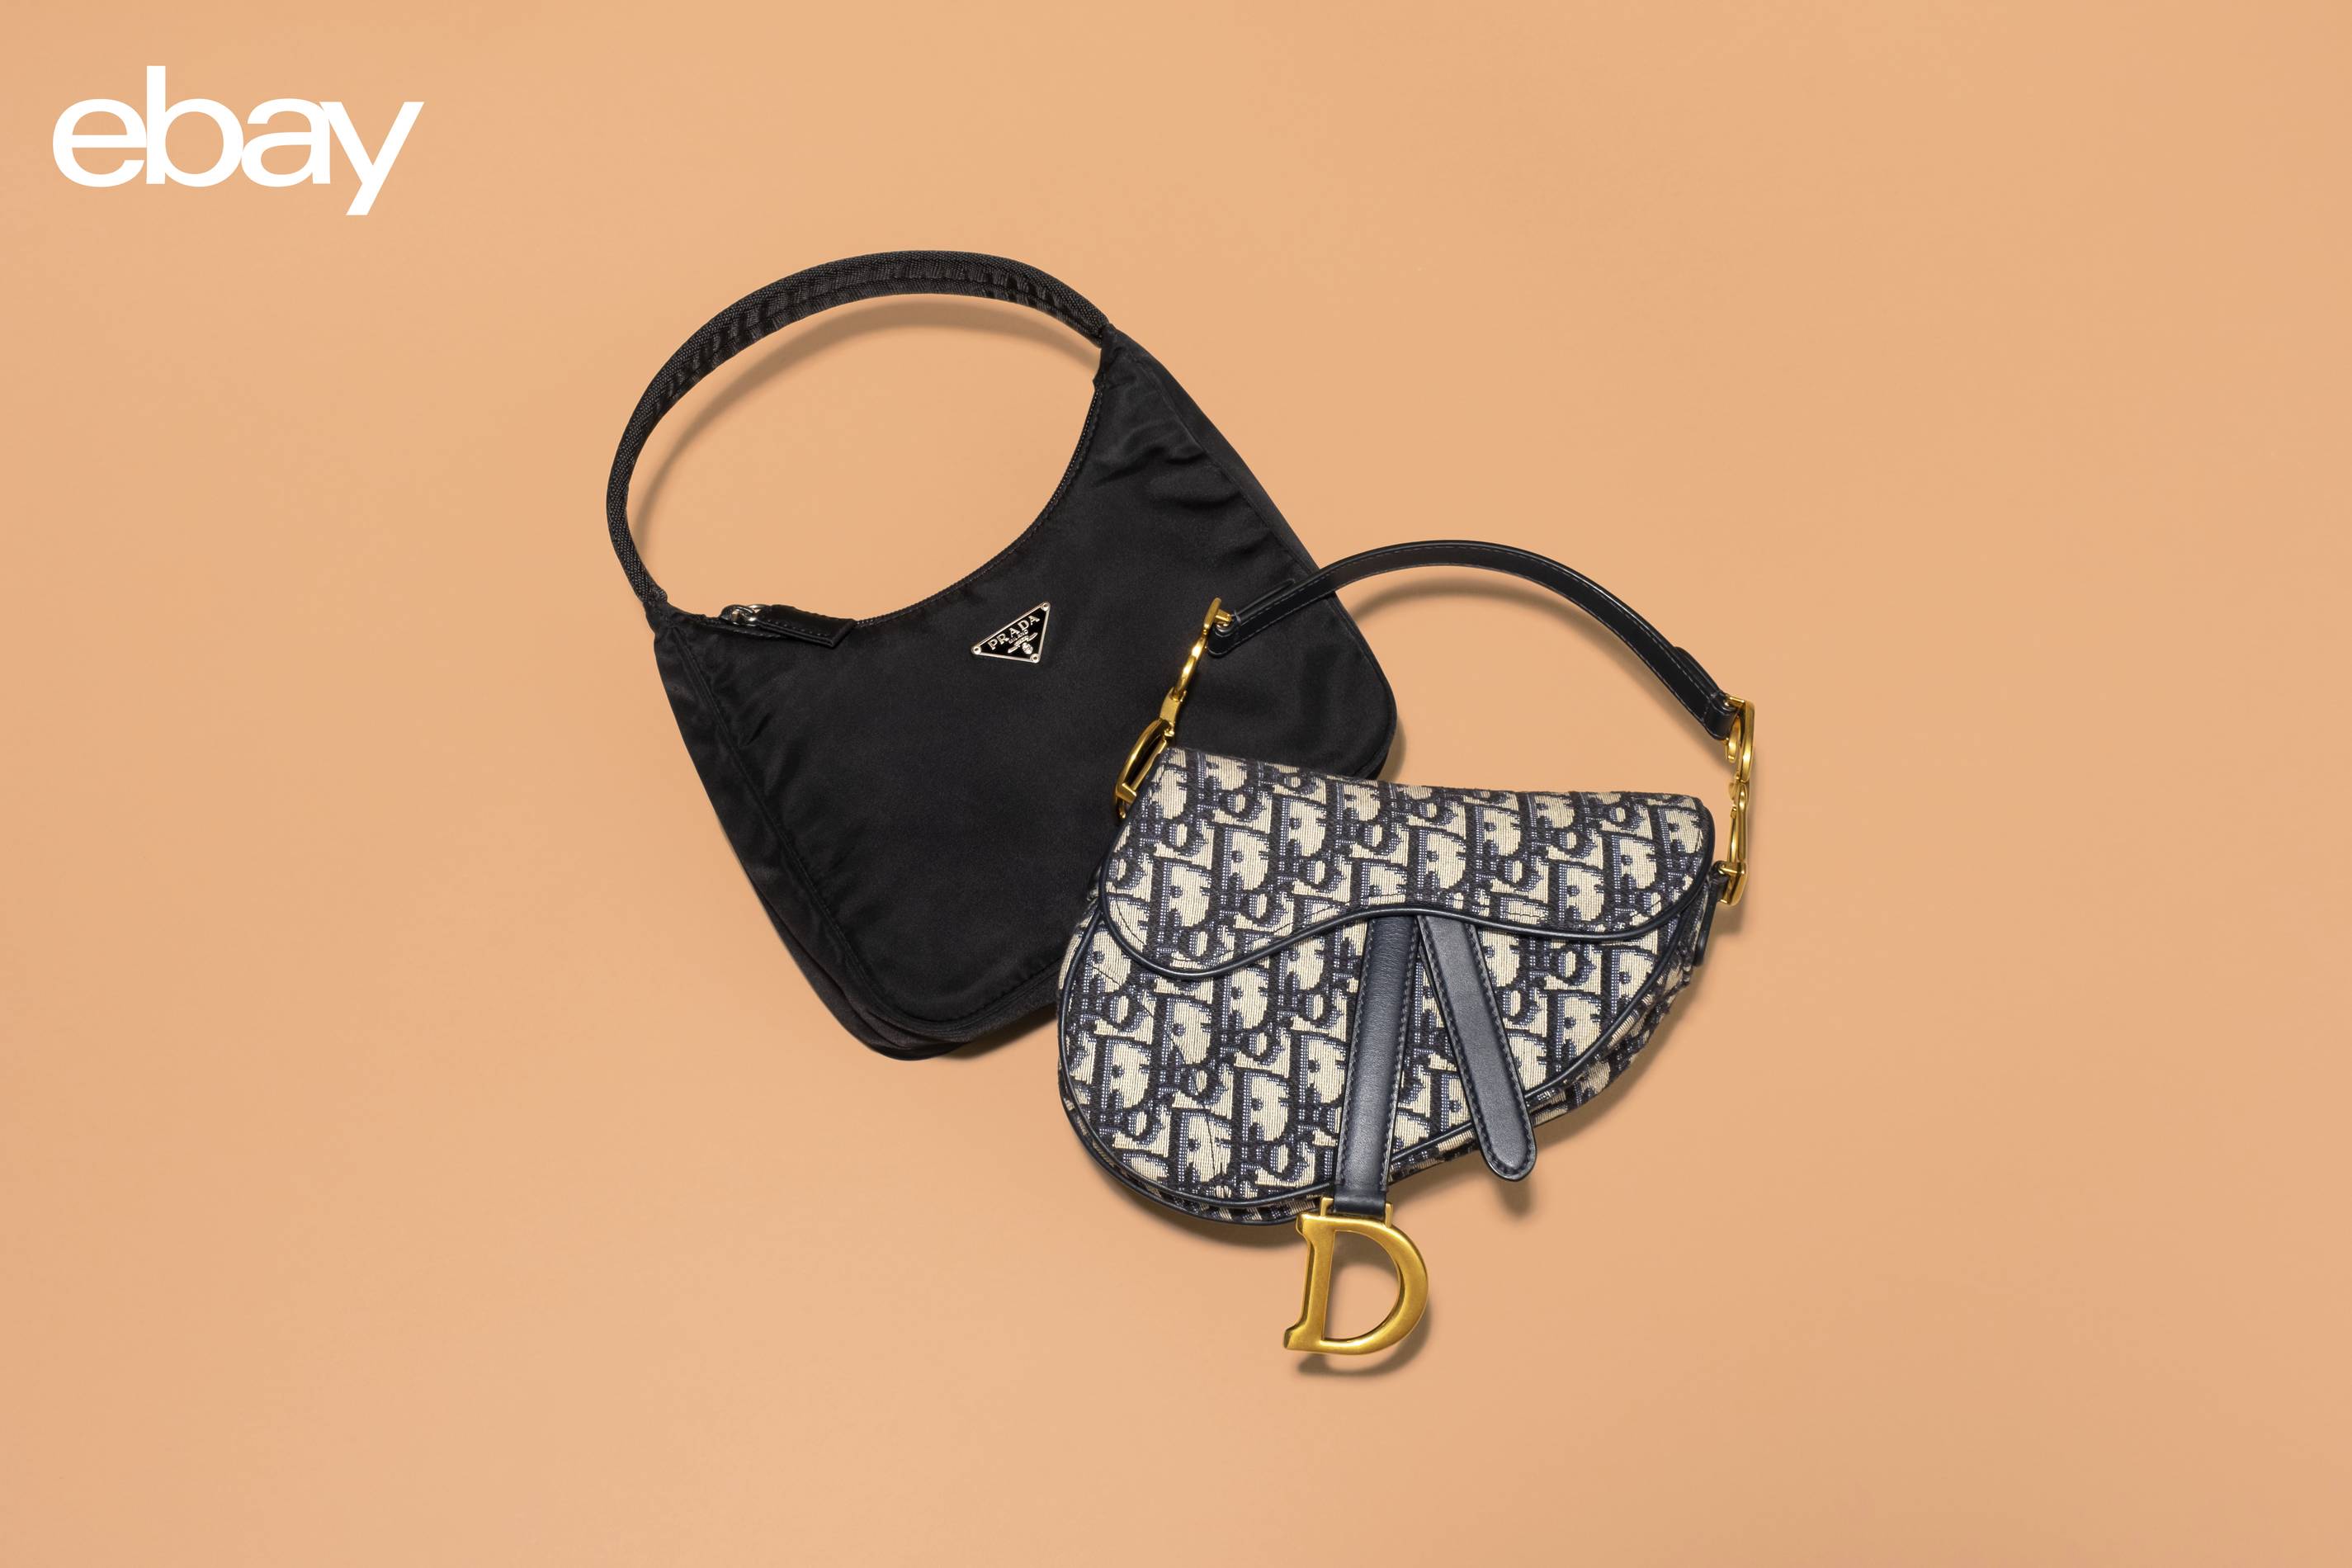 ebay designer handbags for sale on consignment